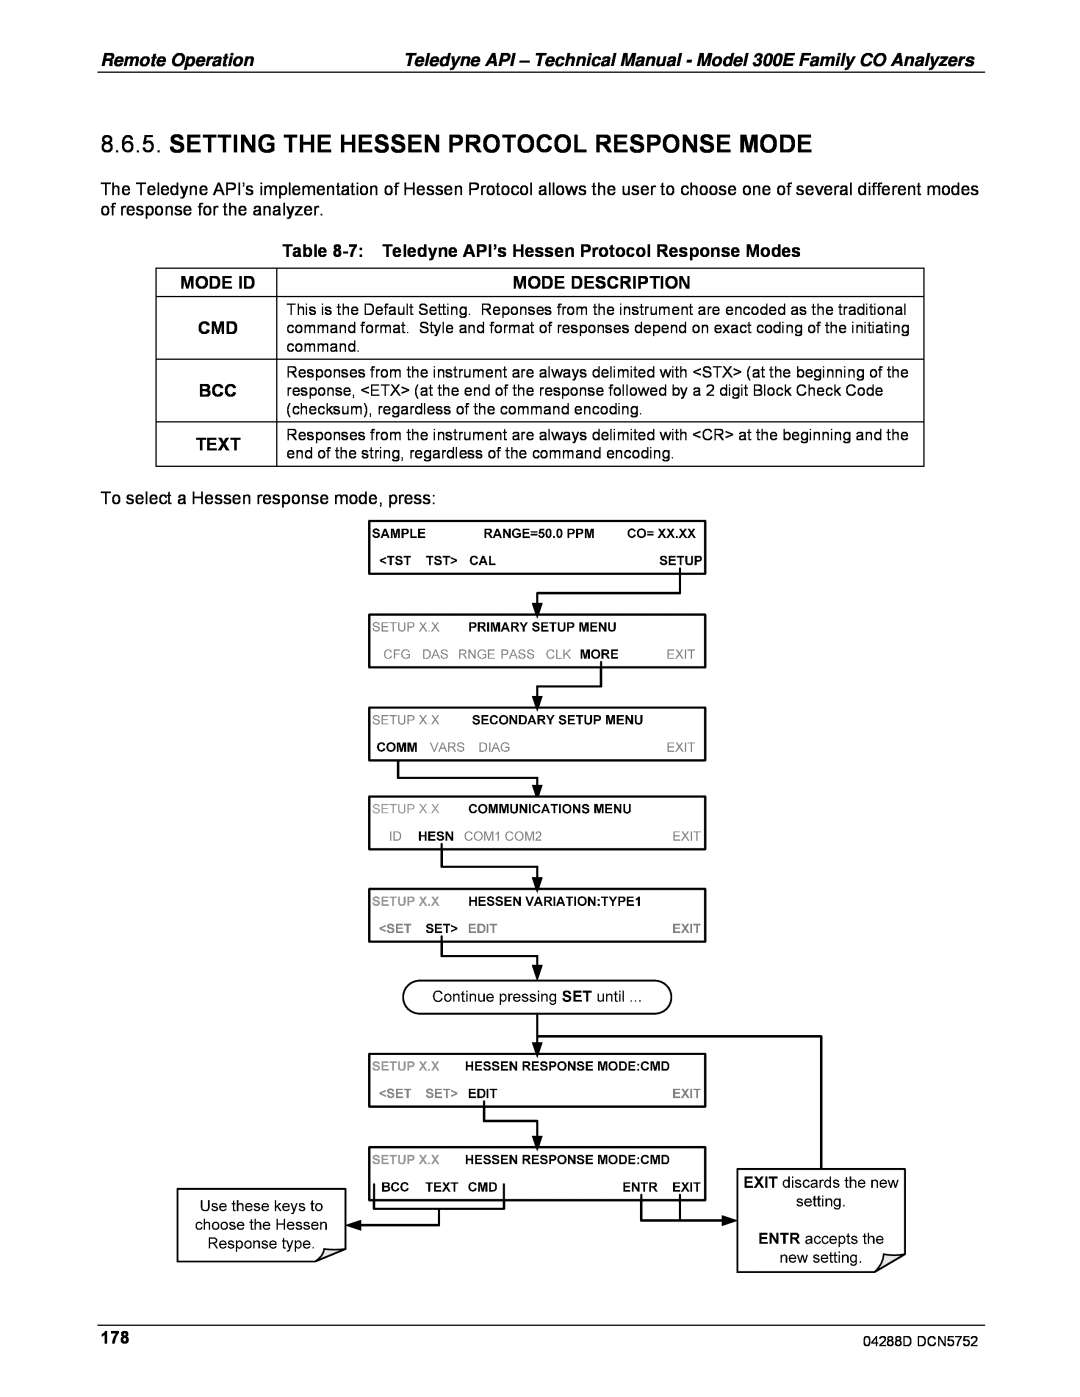 Teledyne M300EM operation manual Setting The Hessen Protocol Response Mode, Mode Id, Mode Description, Text 